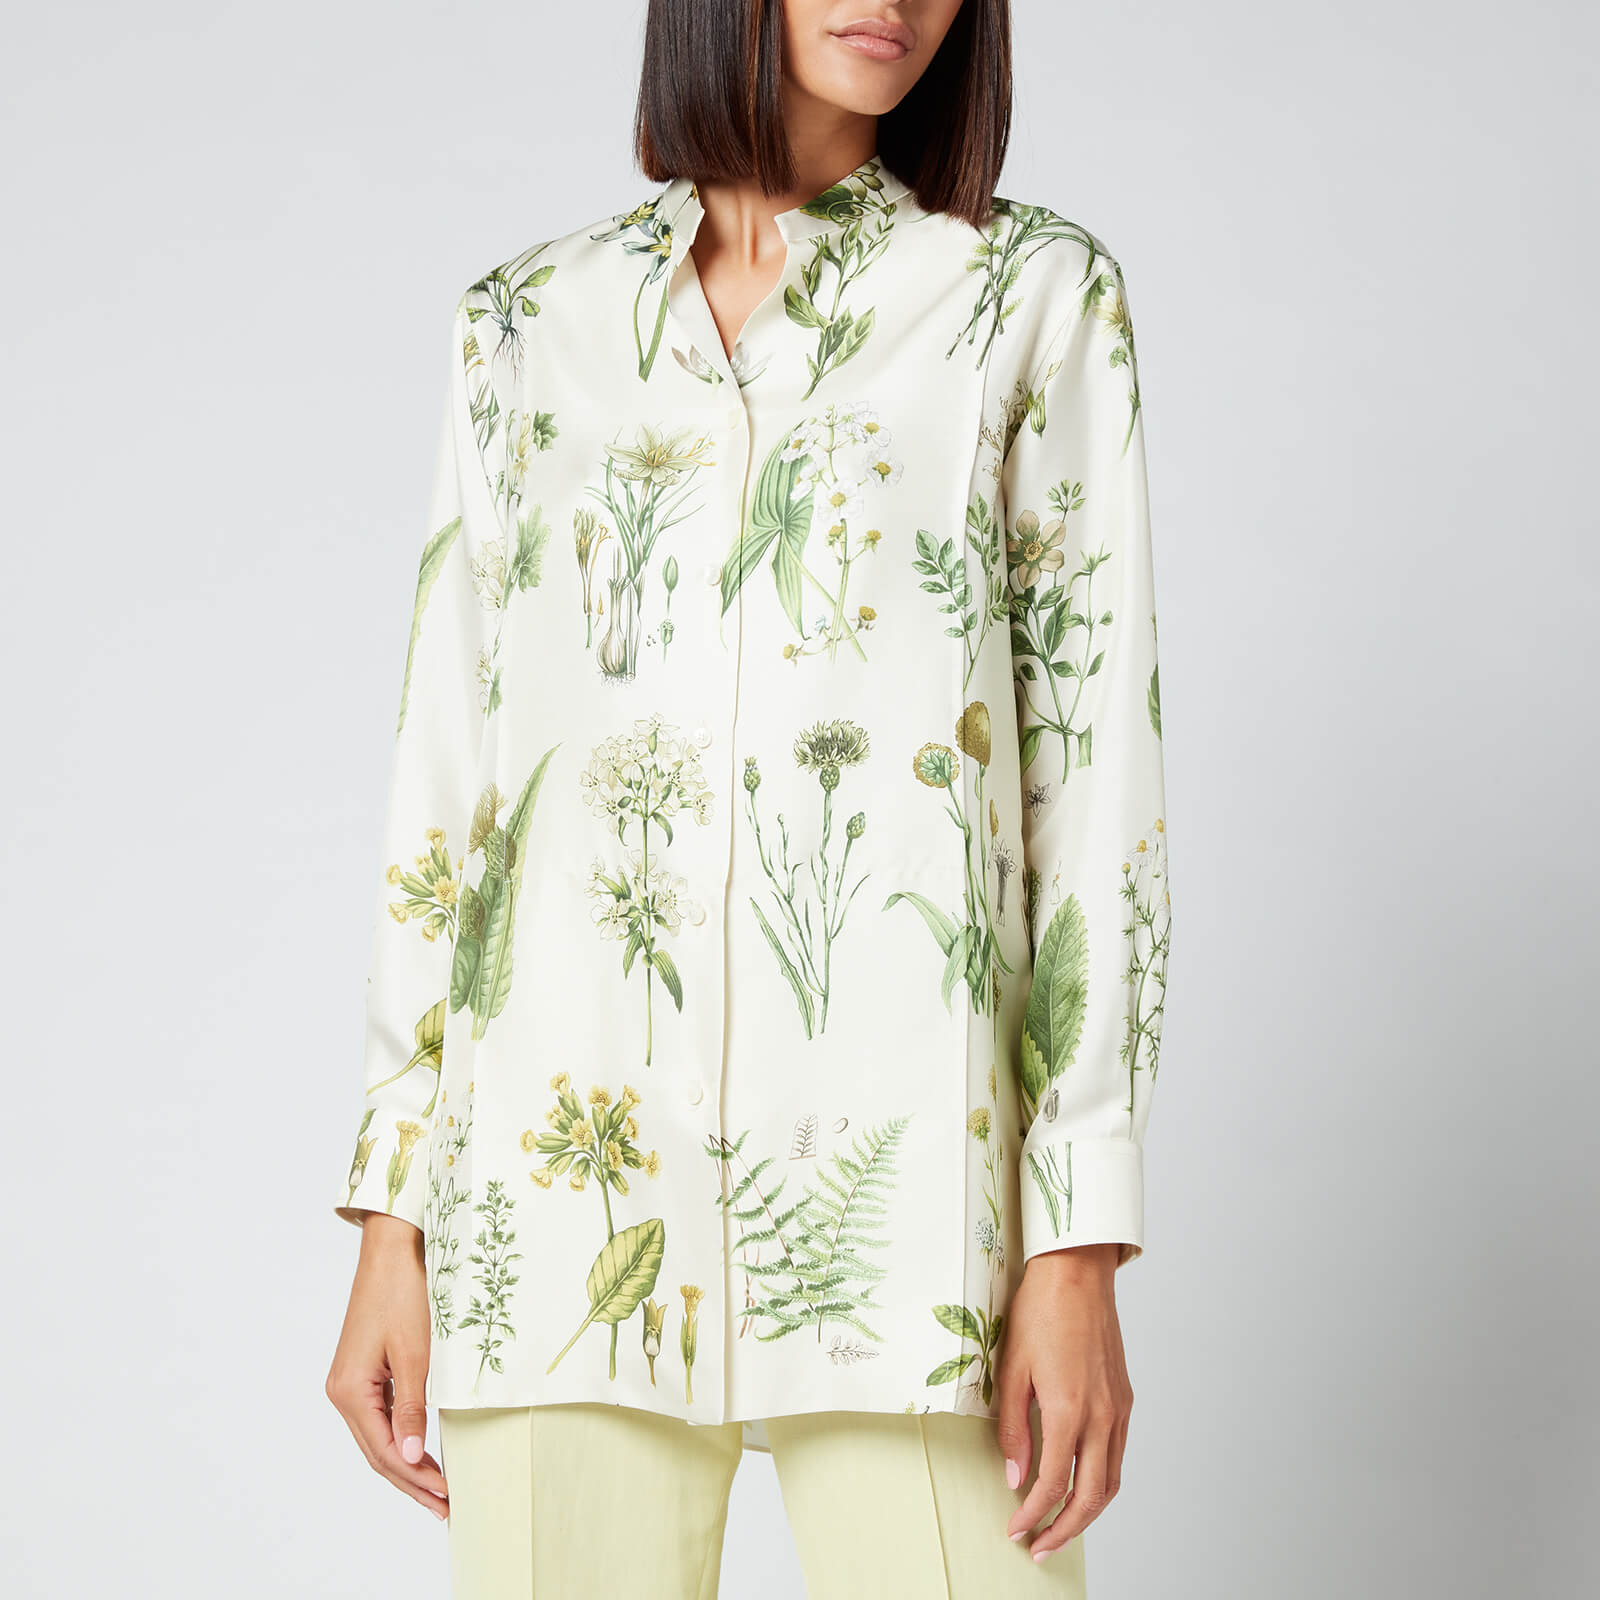 Salvatore Ferragamo Women's Printed Leaf Shirt - Toni Hedren Green - IT 36